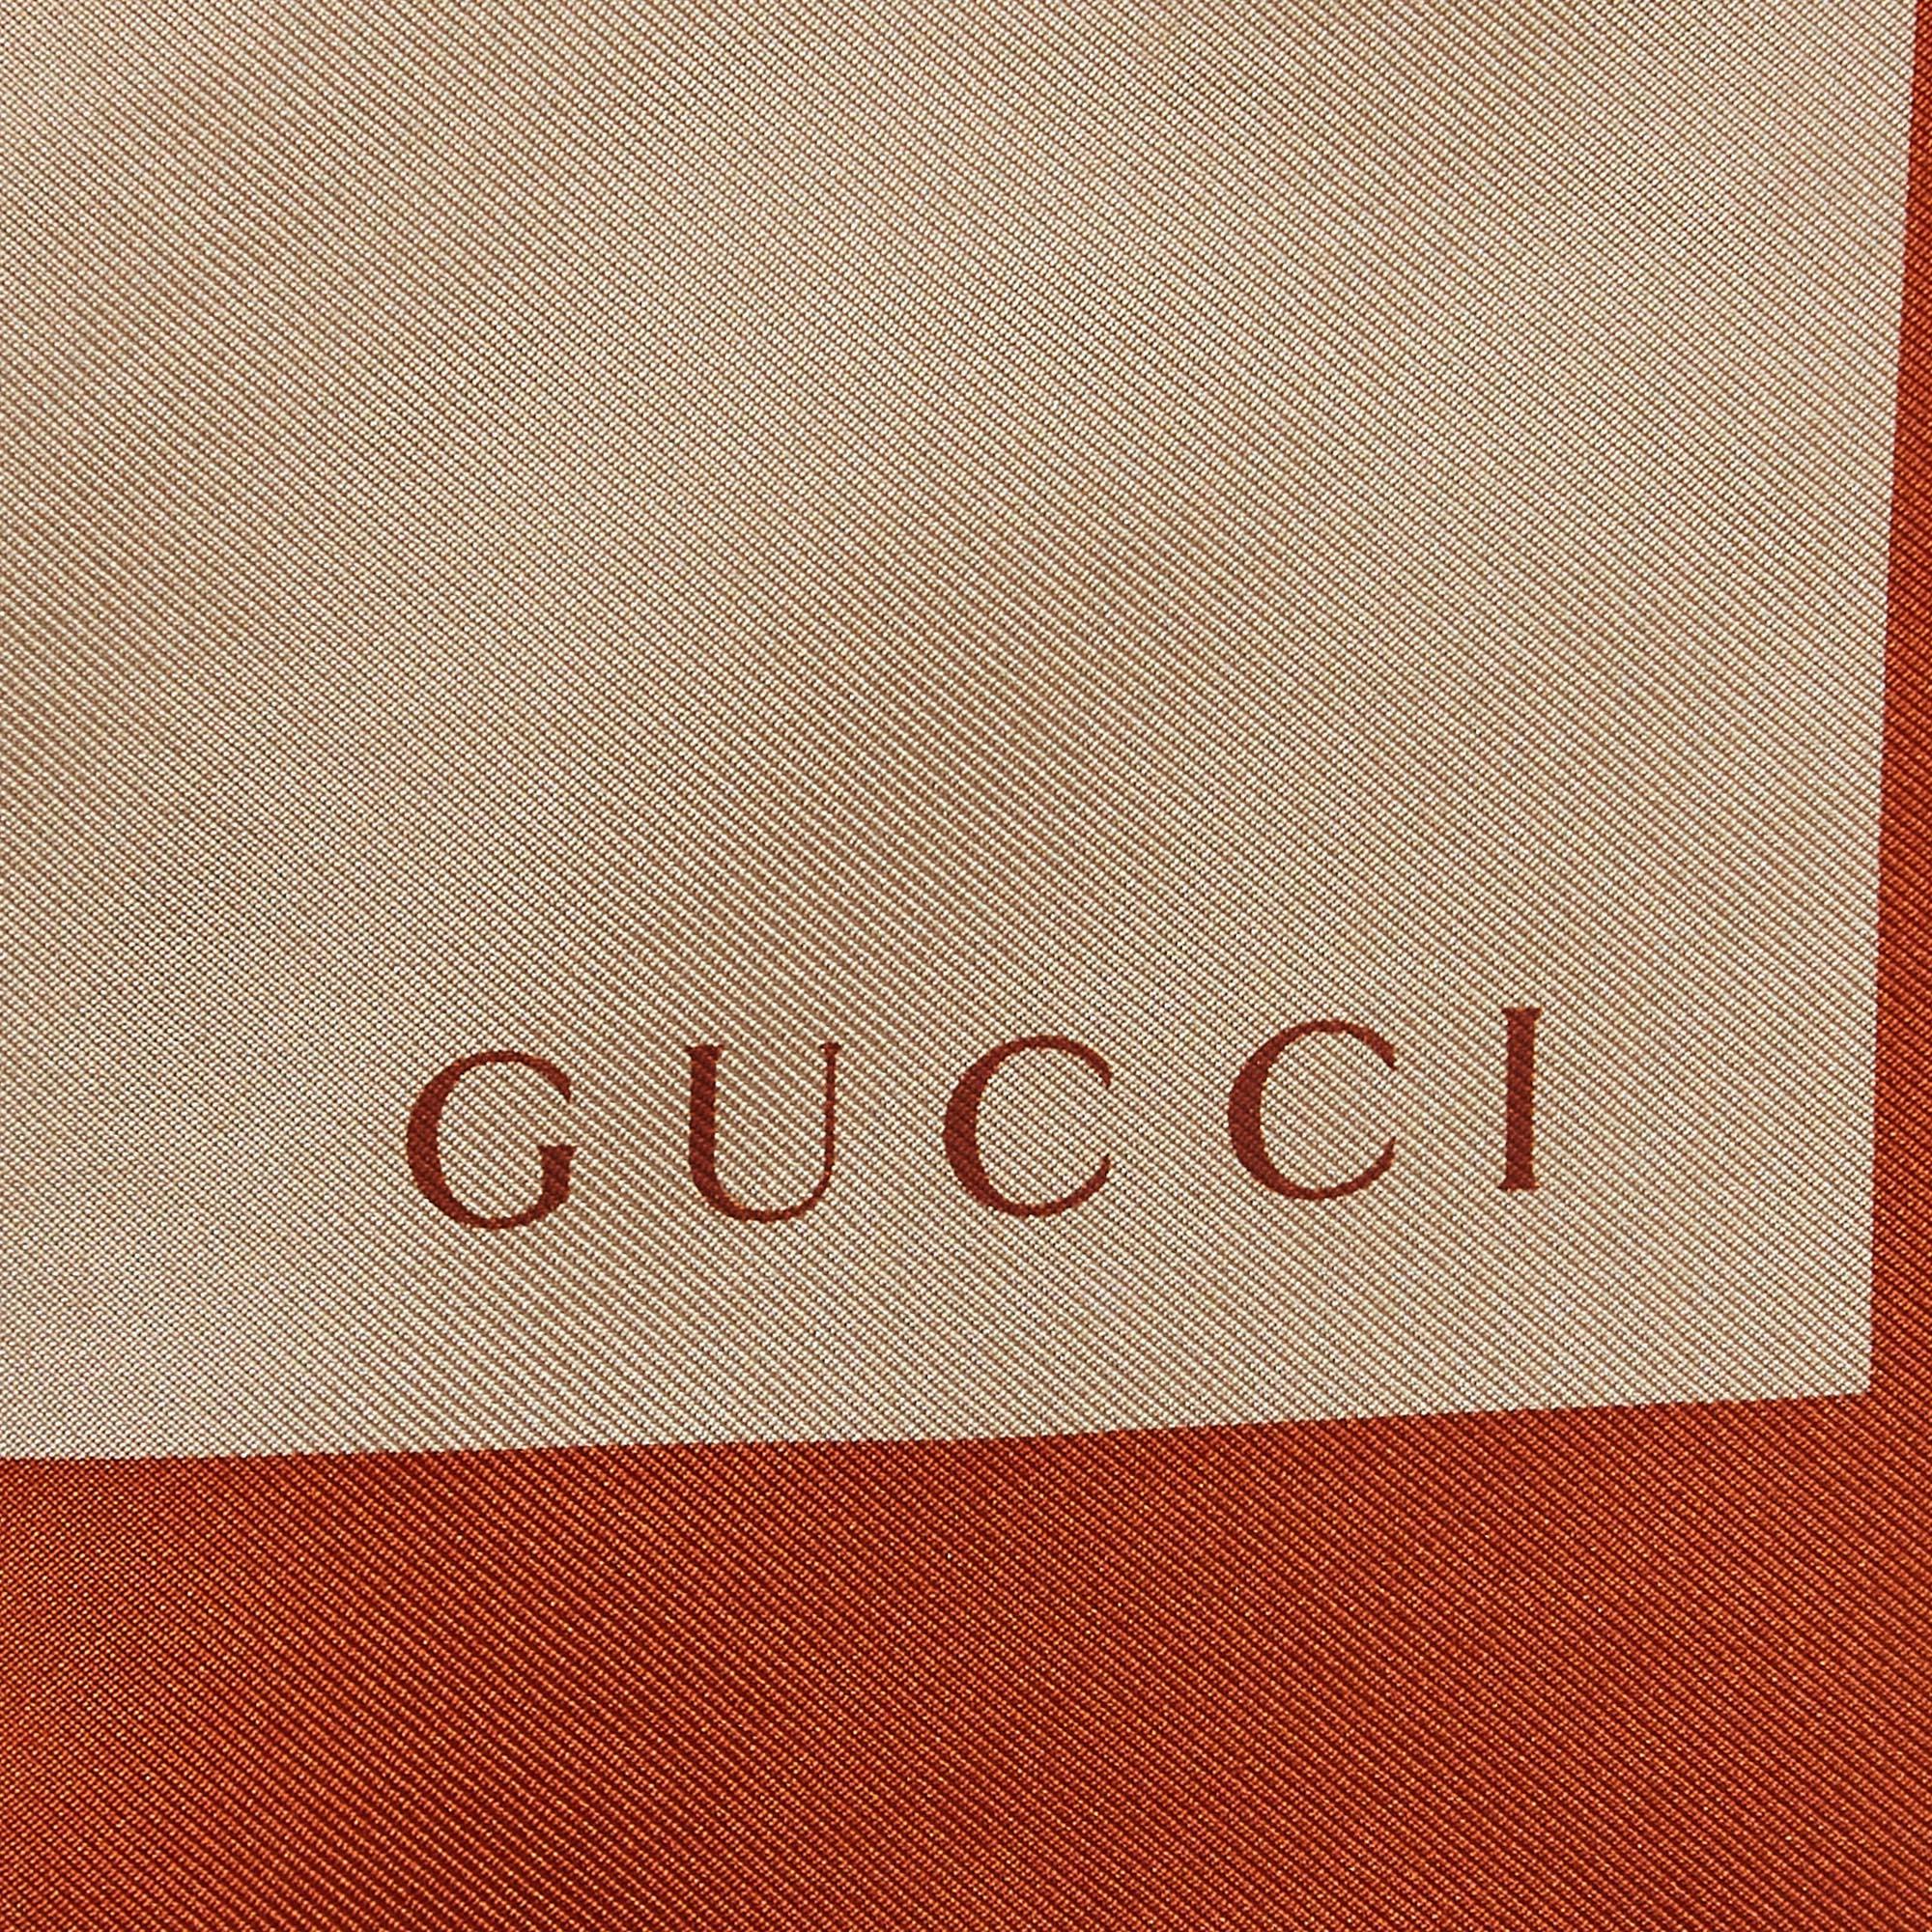 Gucci Orange Colorblock Interlocking G Print Silk Scarf 1